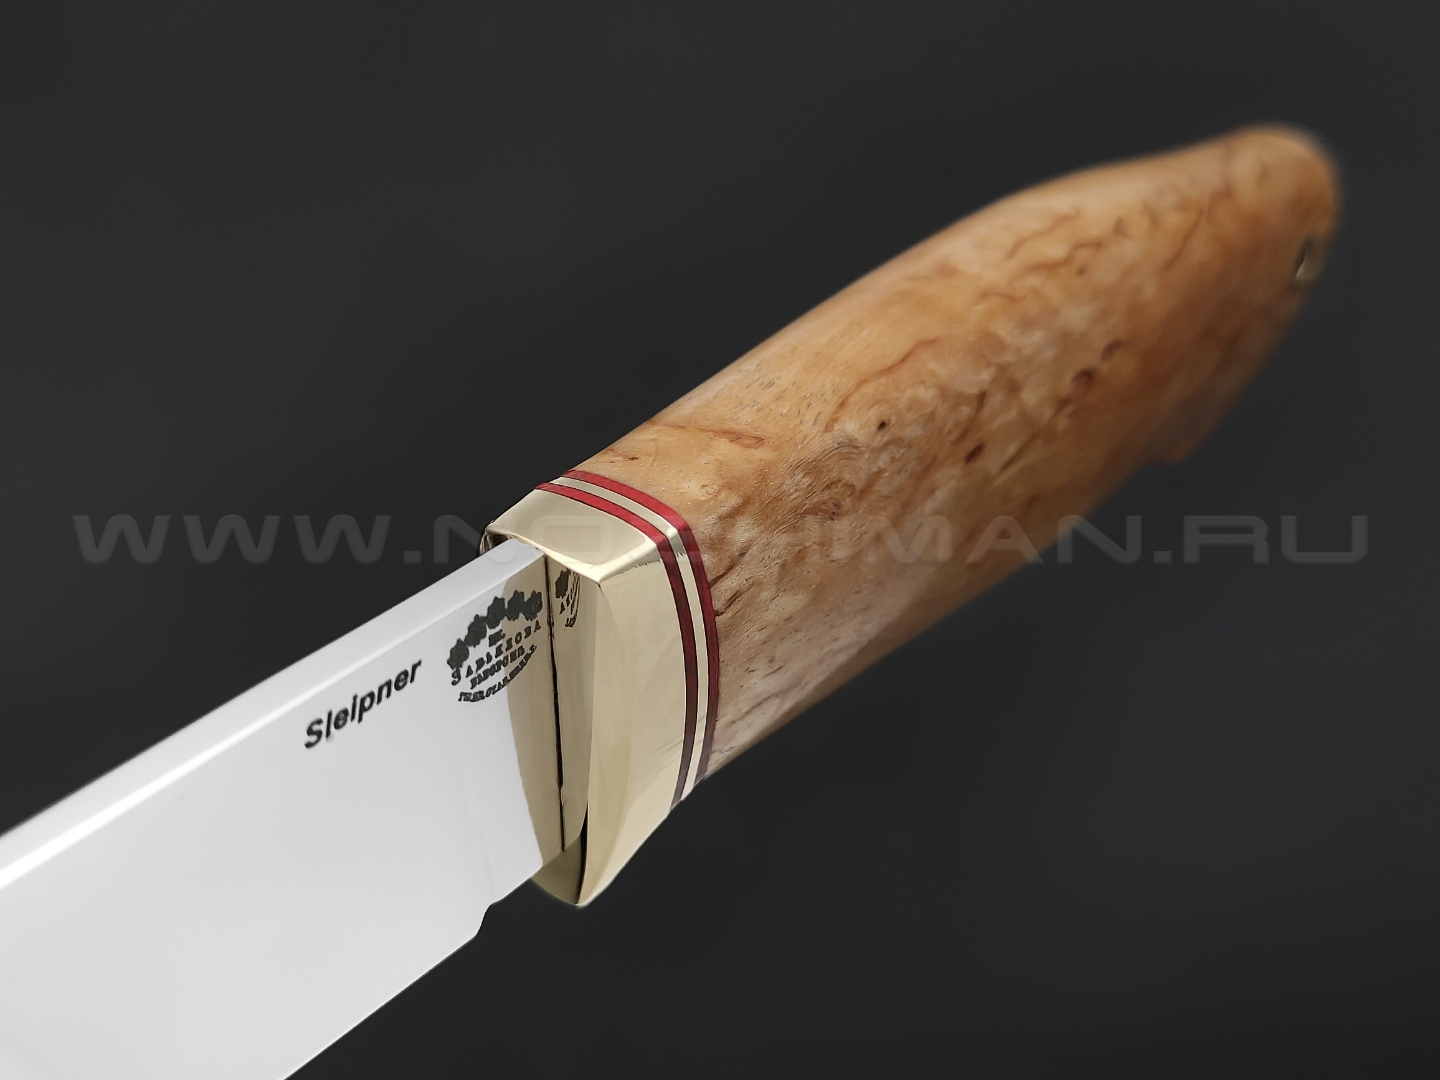 Нож "Ладья" сталь Sleipner, рукоять карельская берёза (Товарищество Завьялова)